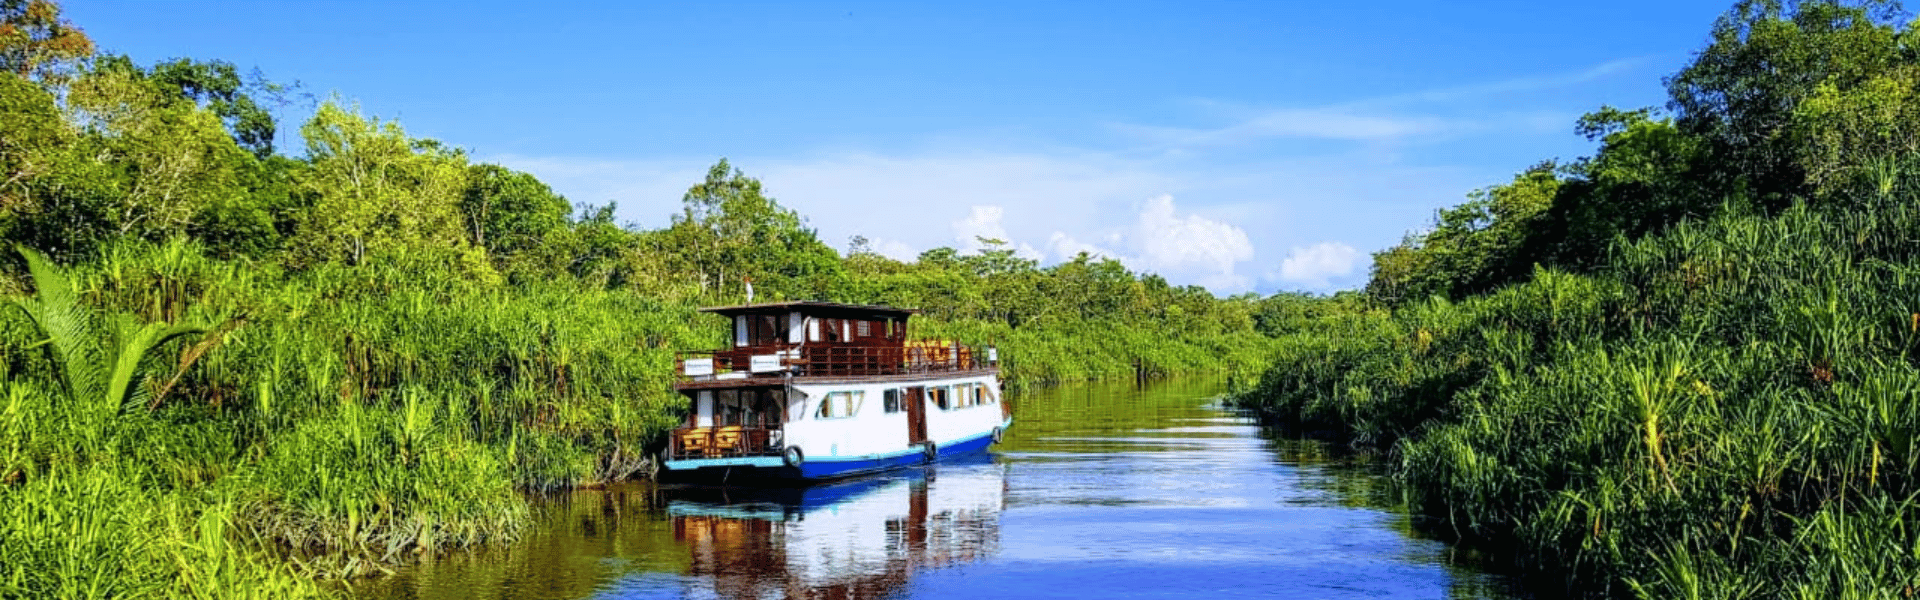 Borneo - Orangutan & River Adventure<br />
